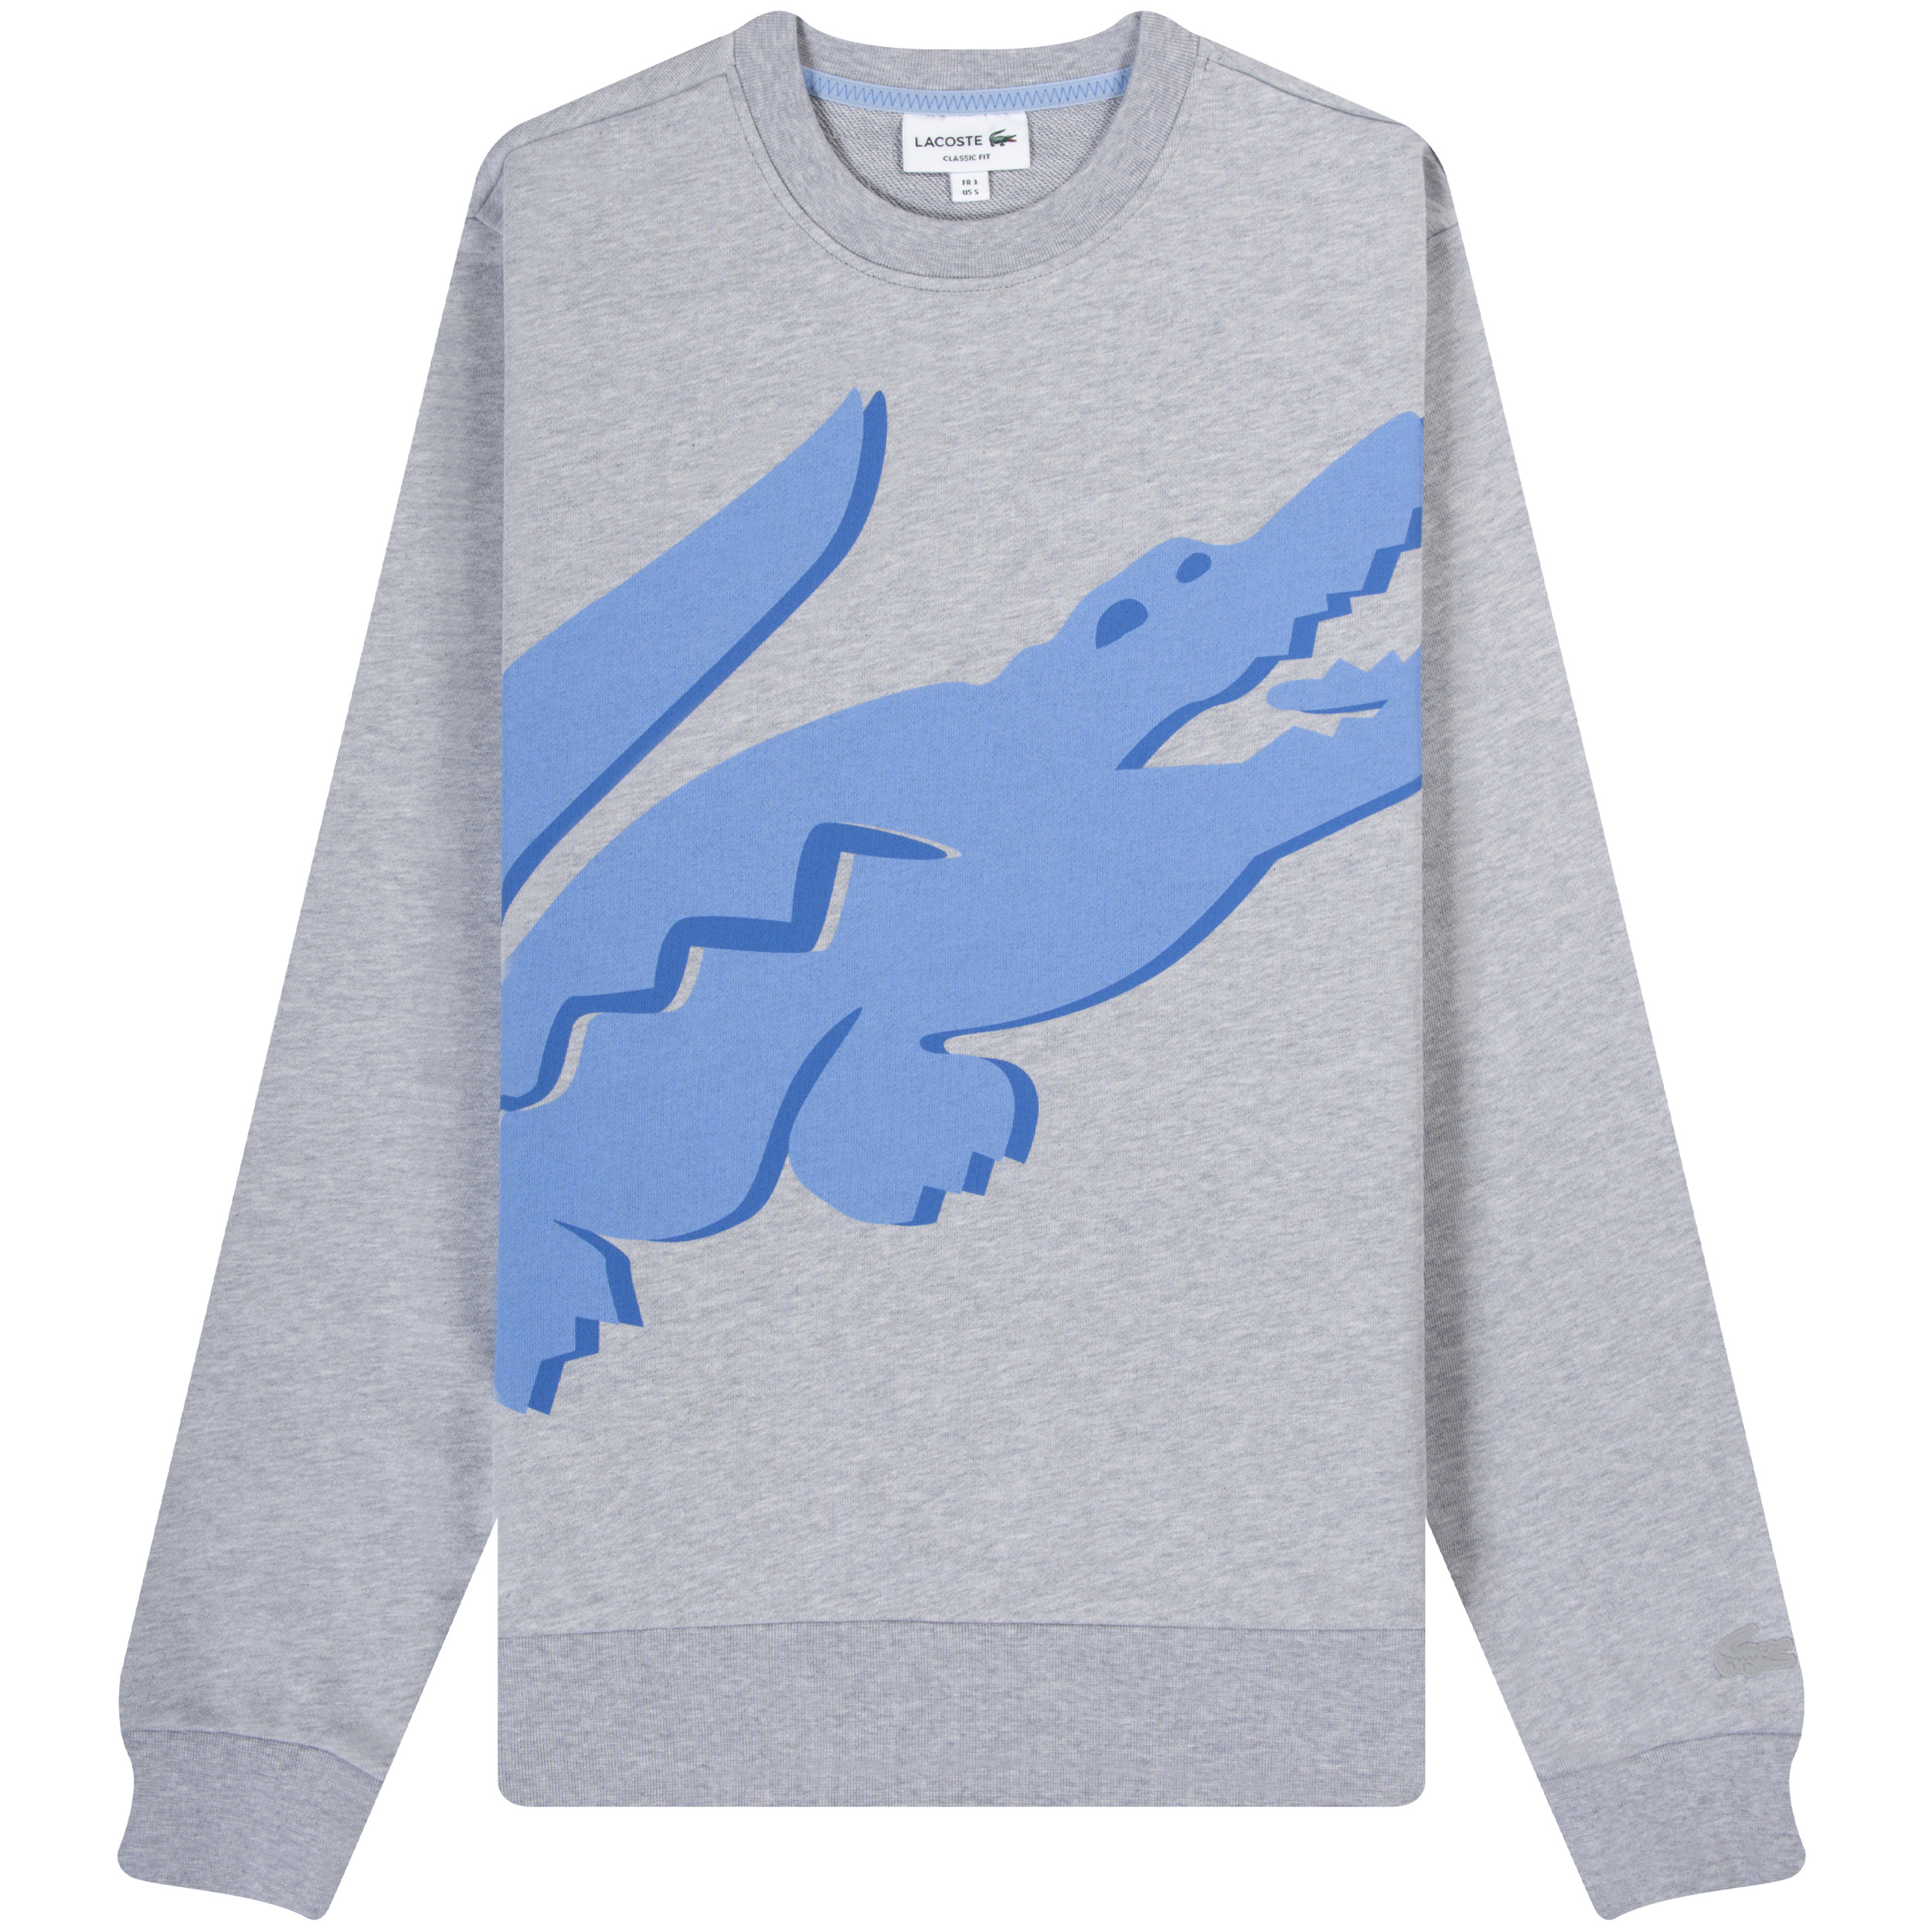 Lacoste ’Oversized Croc Print’ Sweatshirt Grey